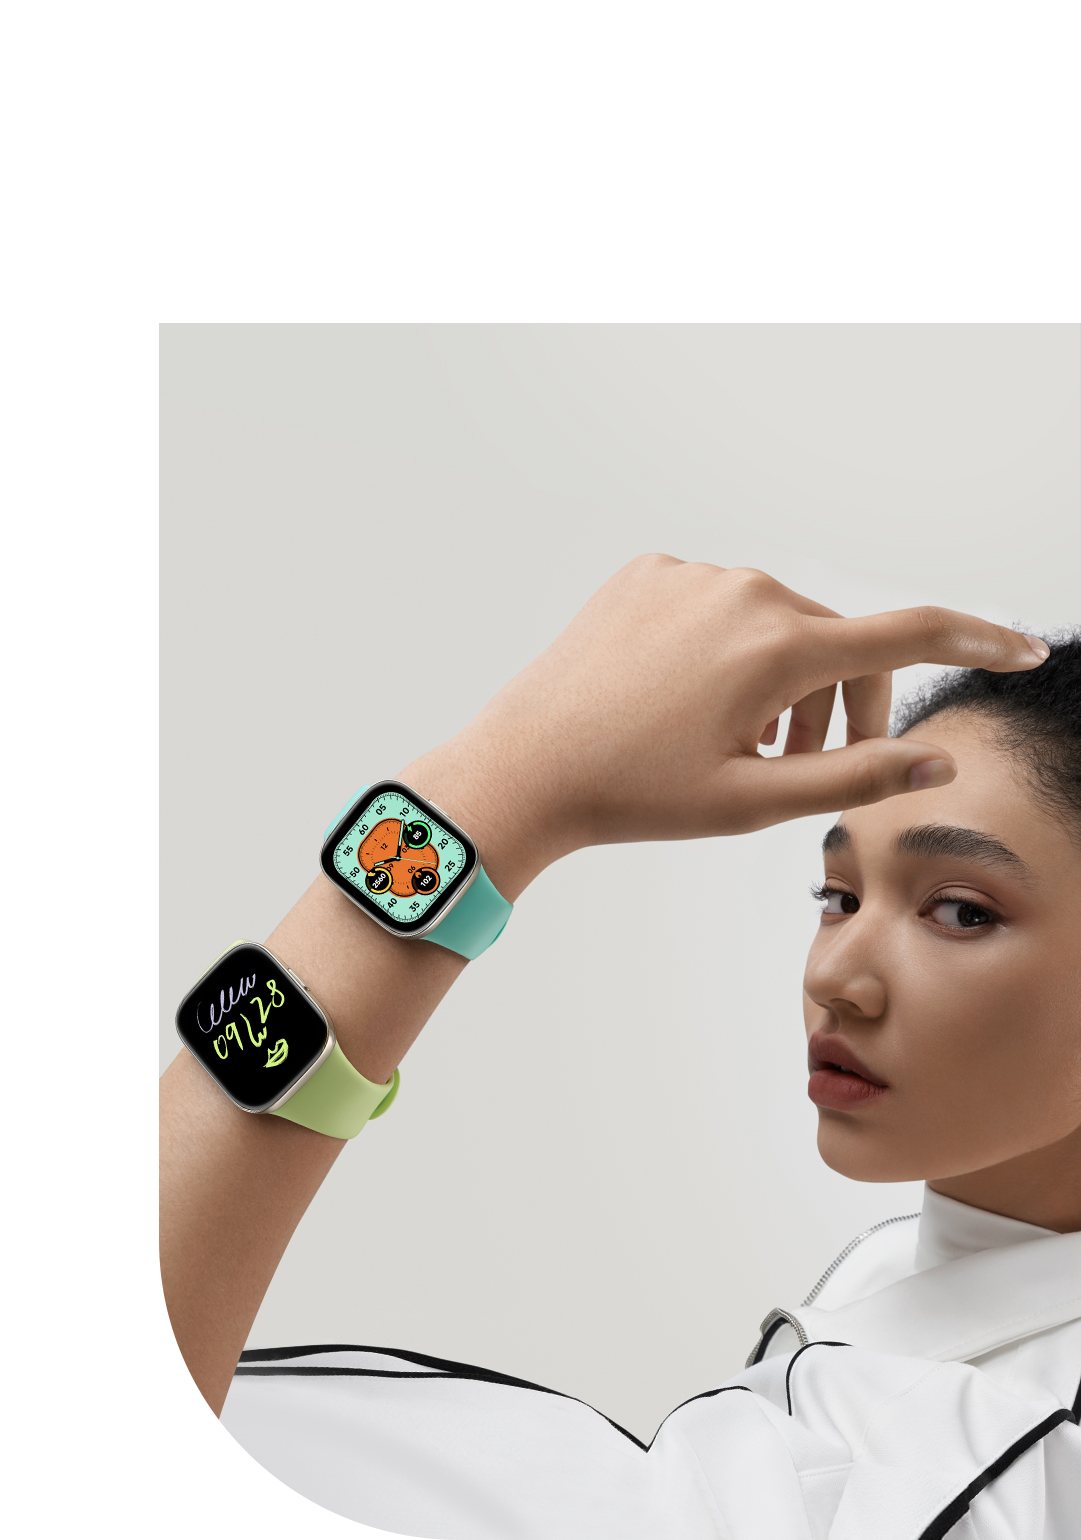 Redmi Watch 3  Xiaomi Global